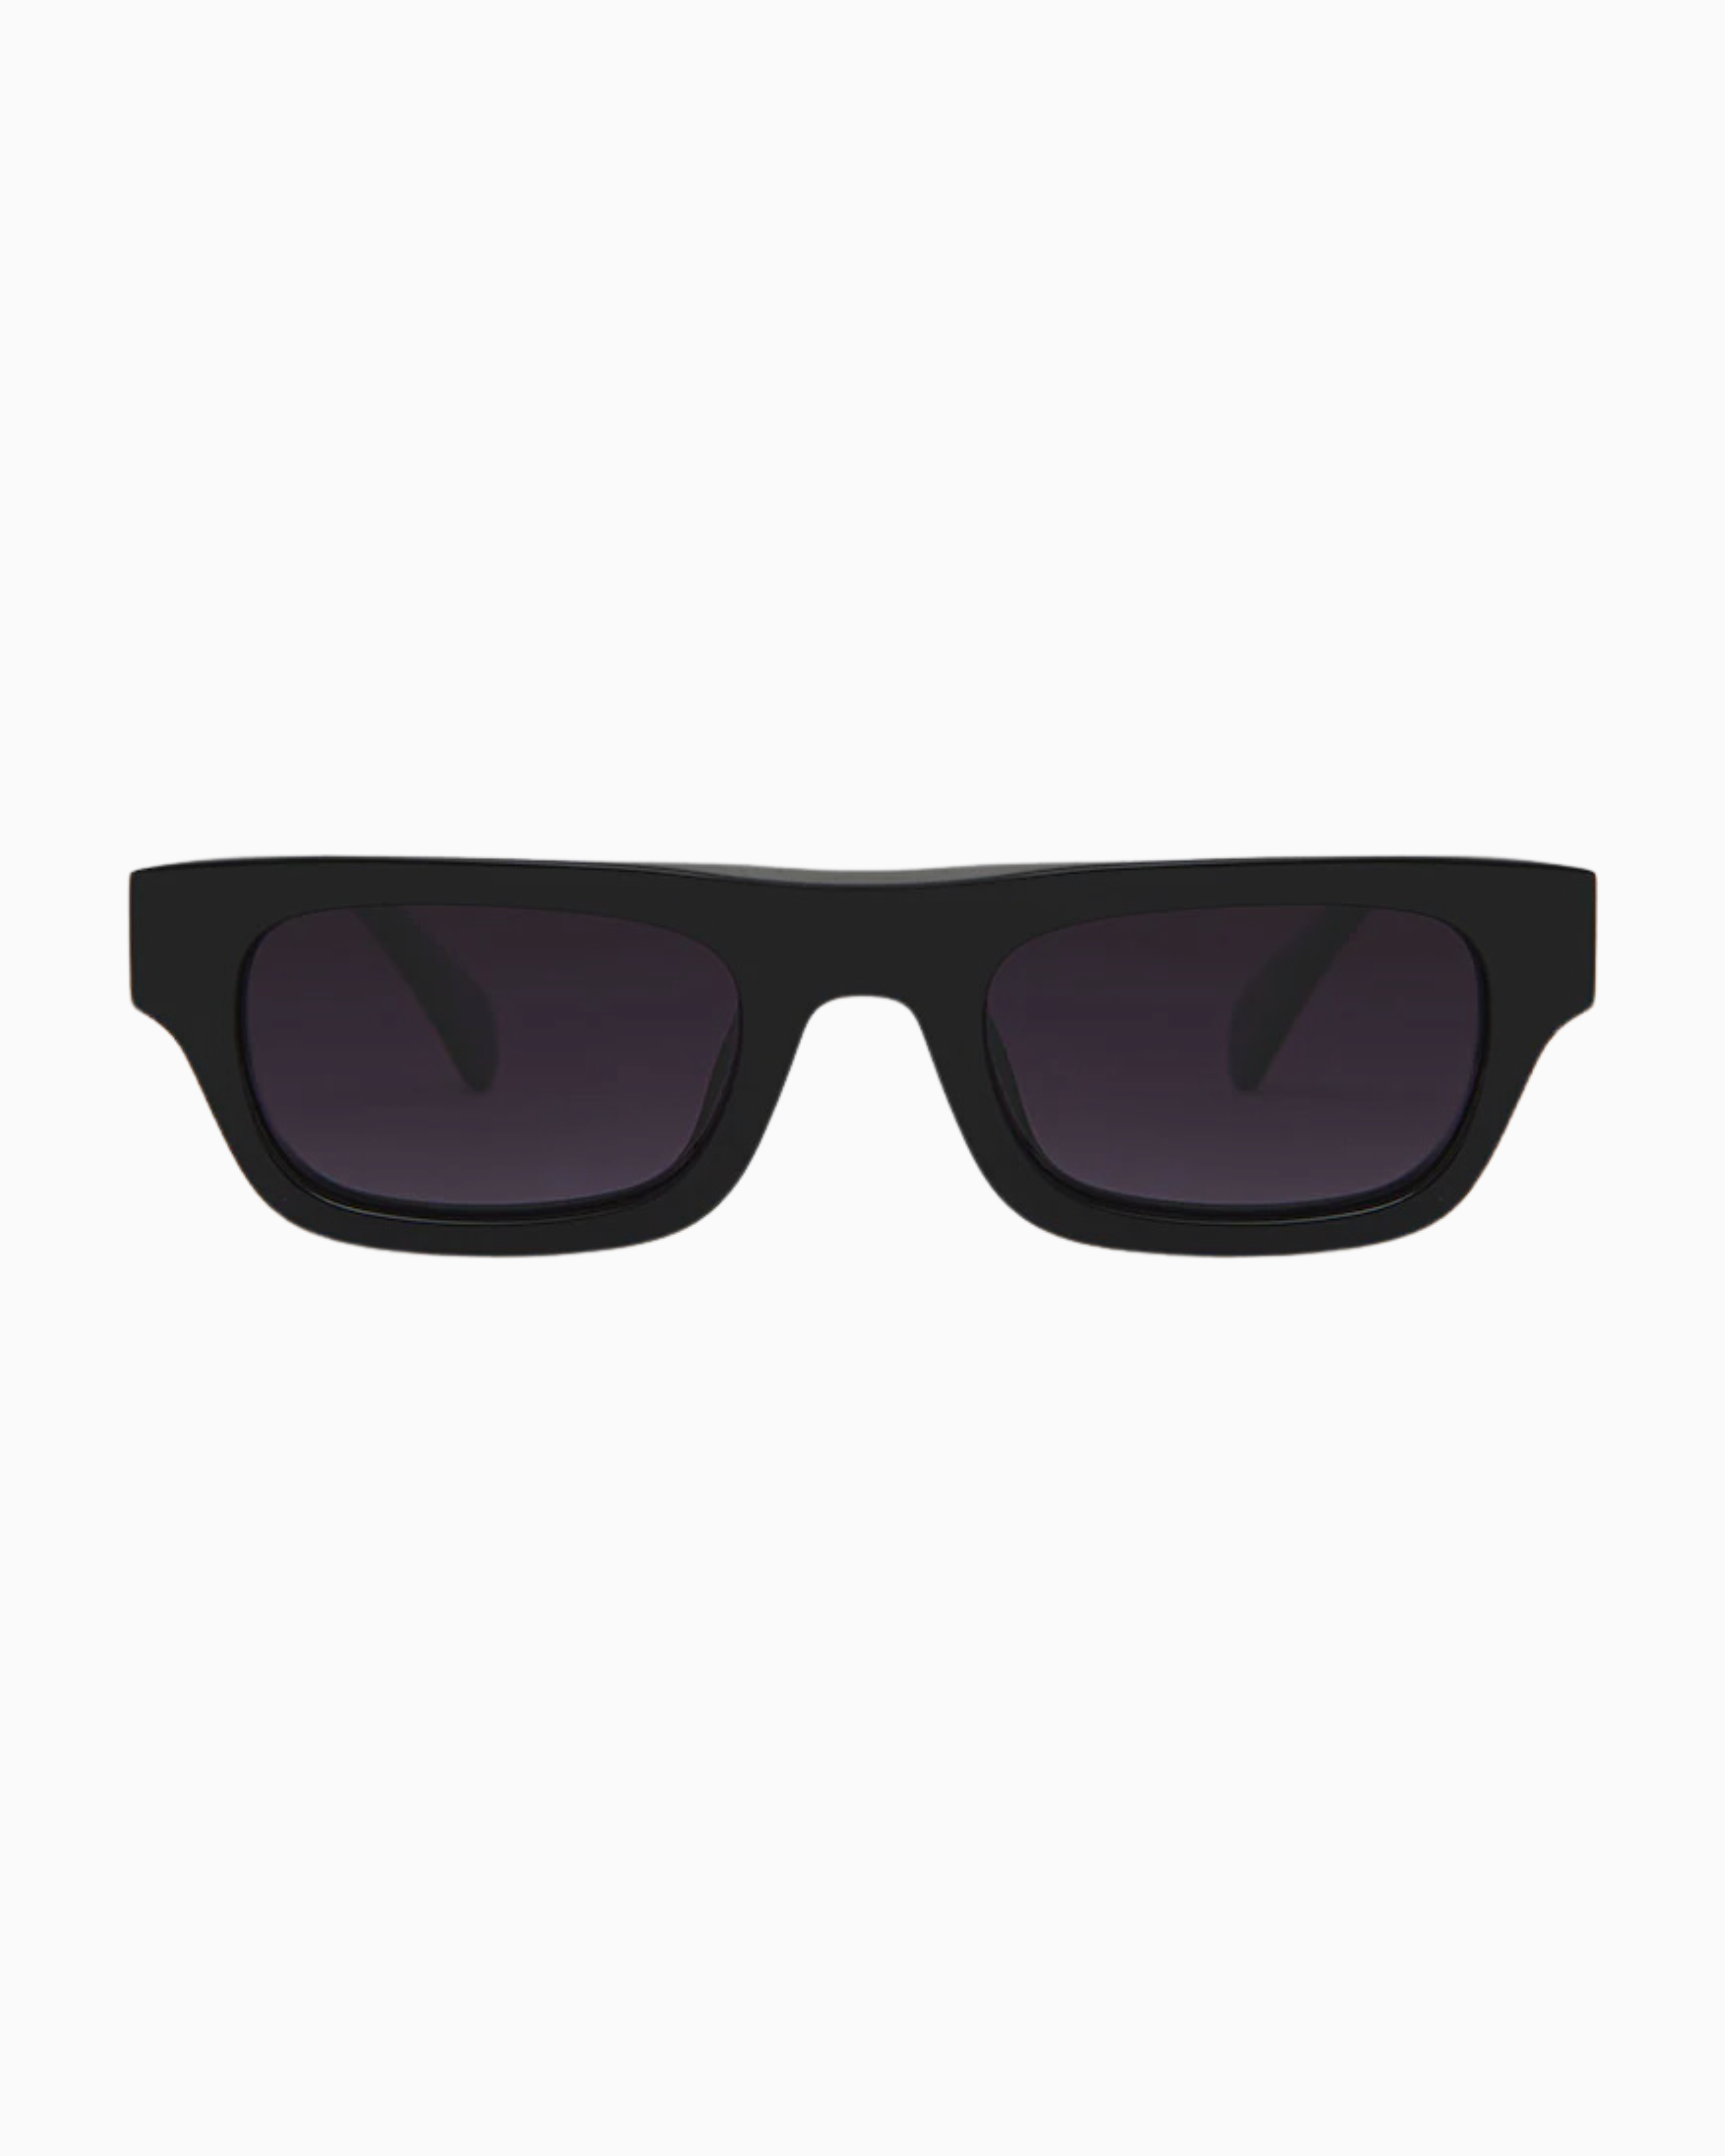 Anine Bing Otis Sunglasses in Black